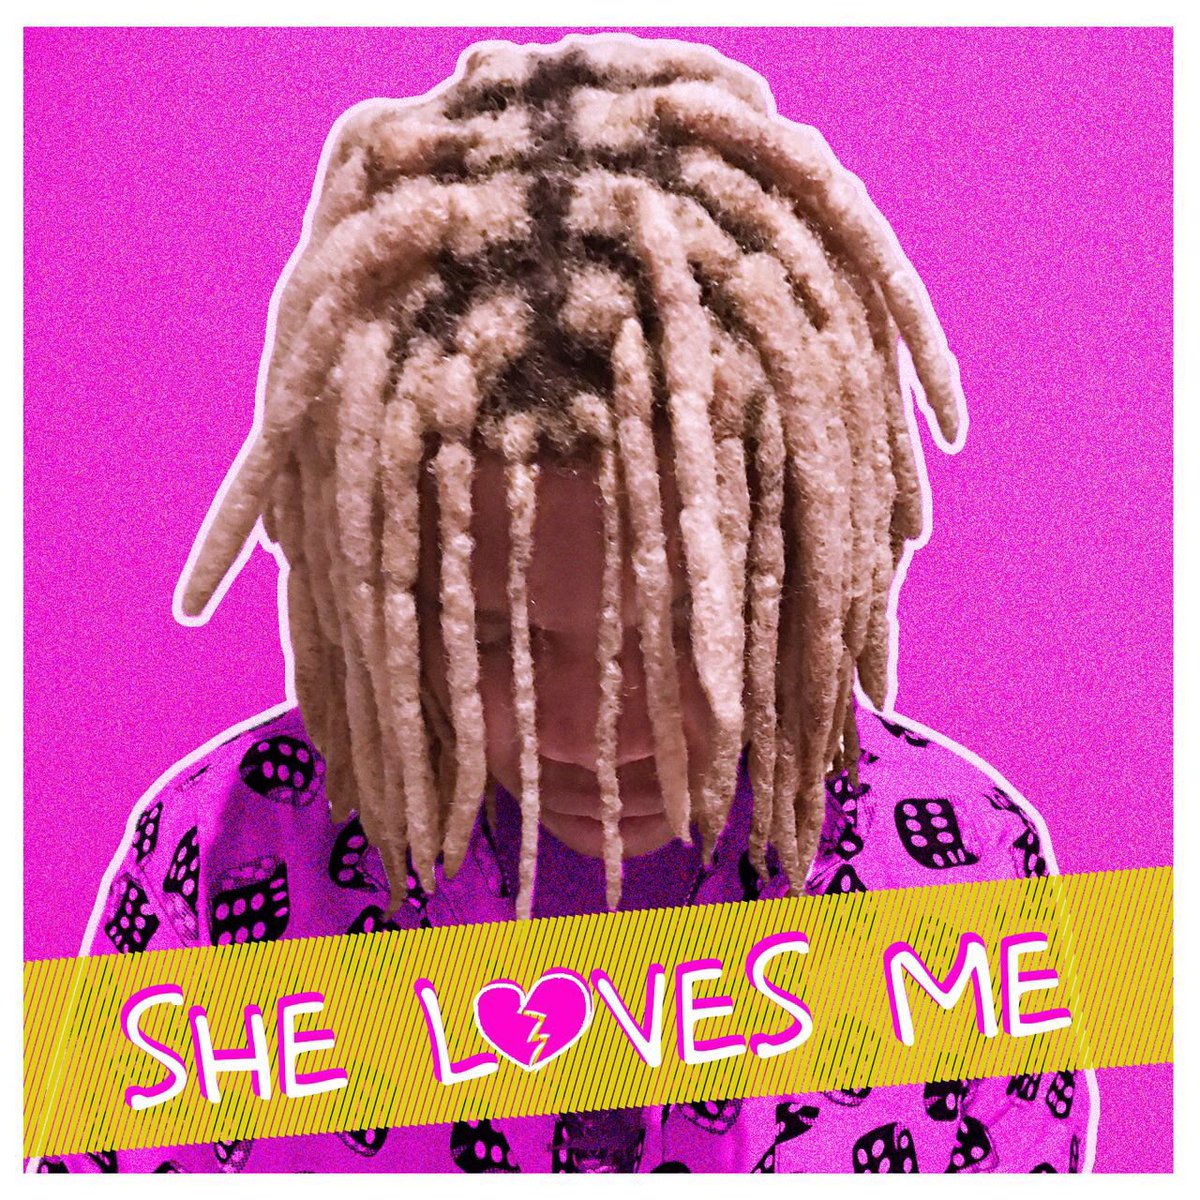 New Release: Saudi - She Loves Me